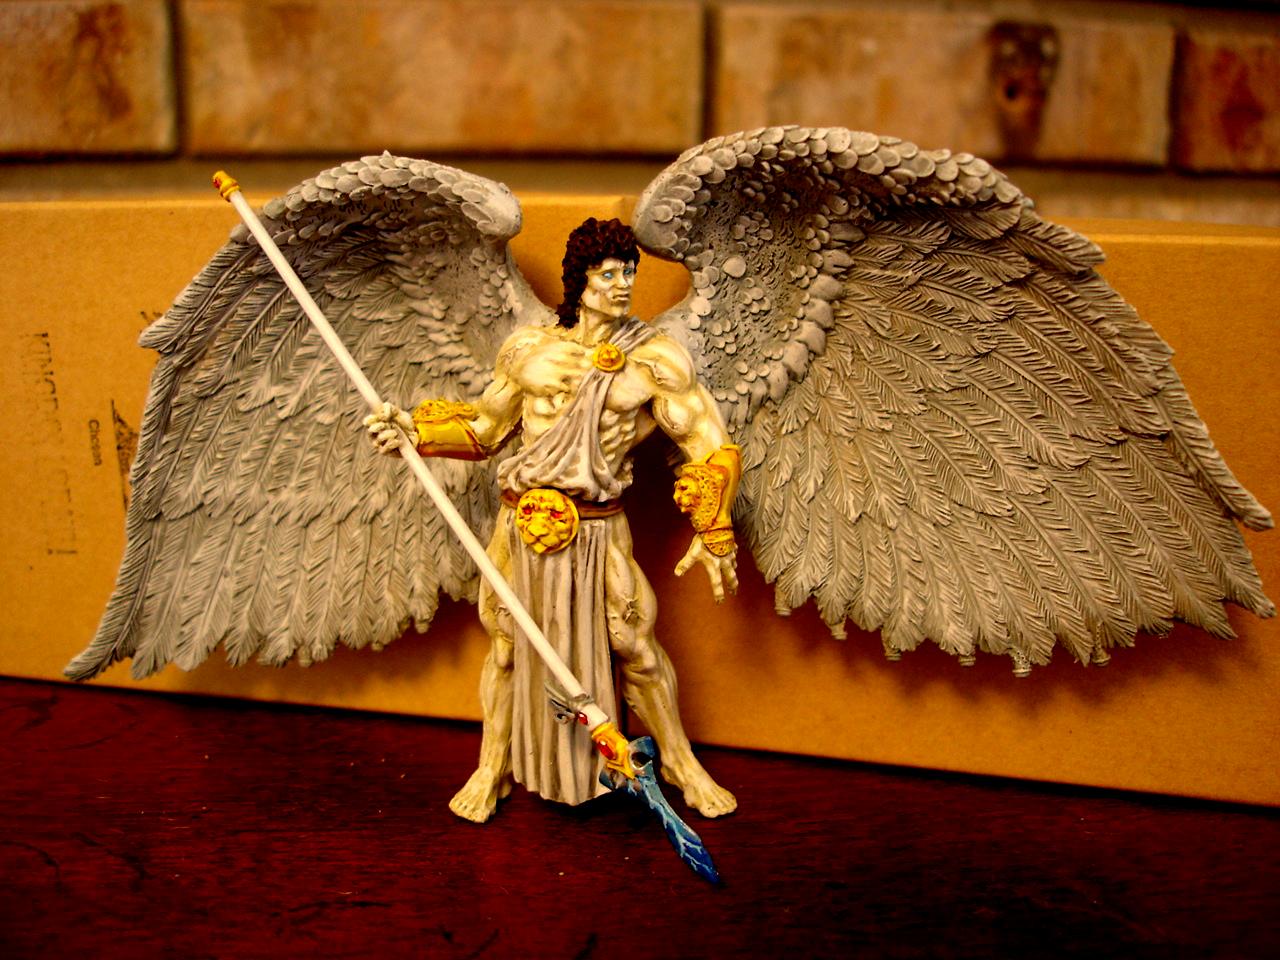 Angel, Arch Angel, The Archangel Gibreel